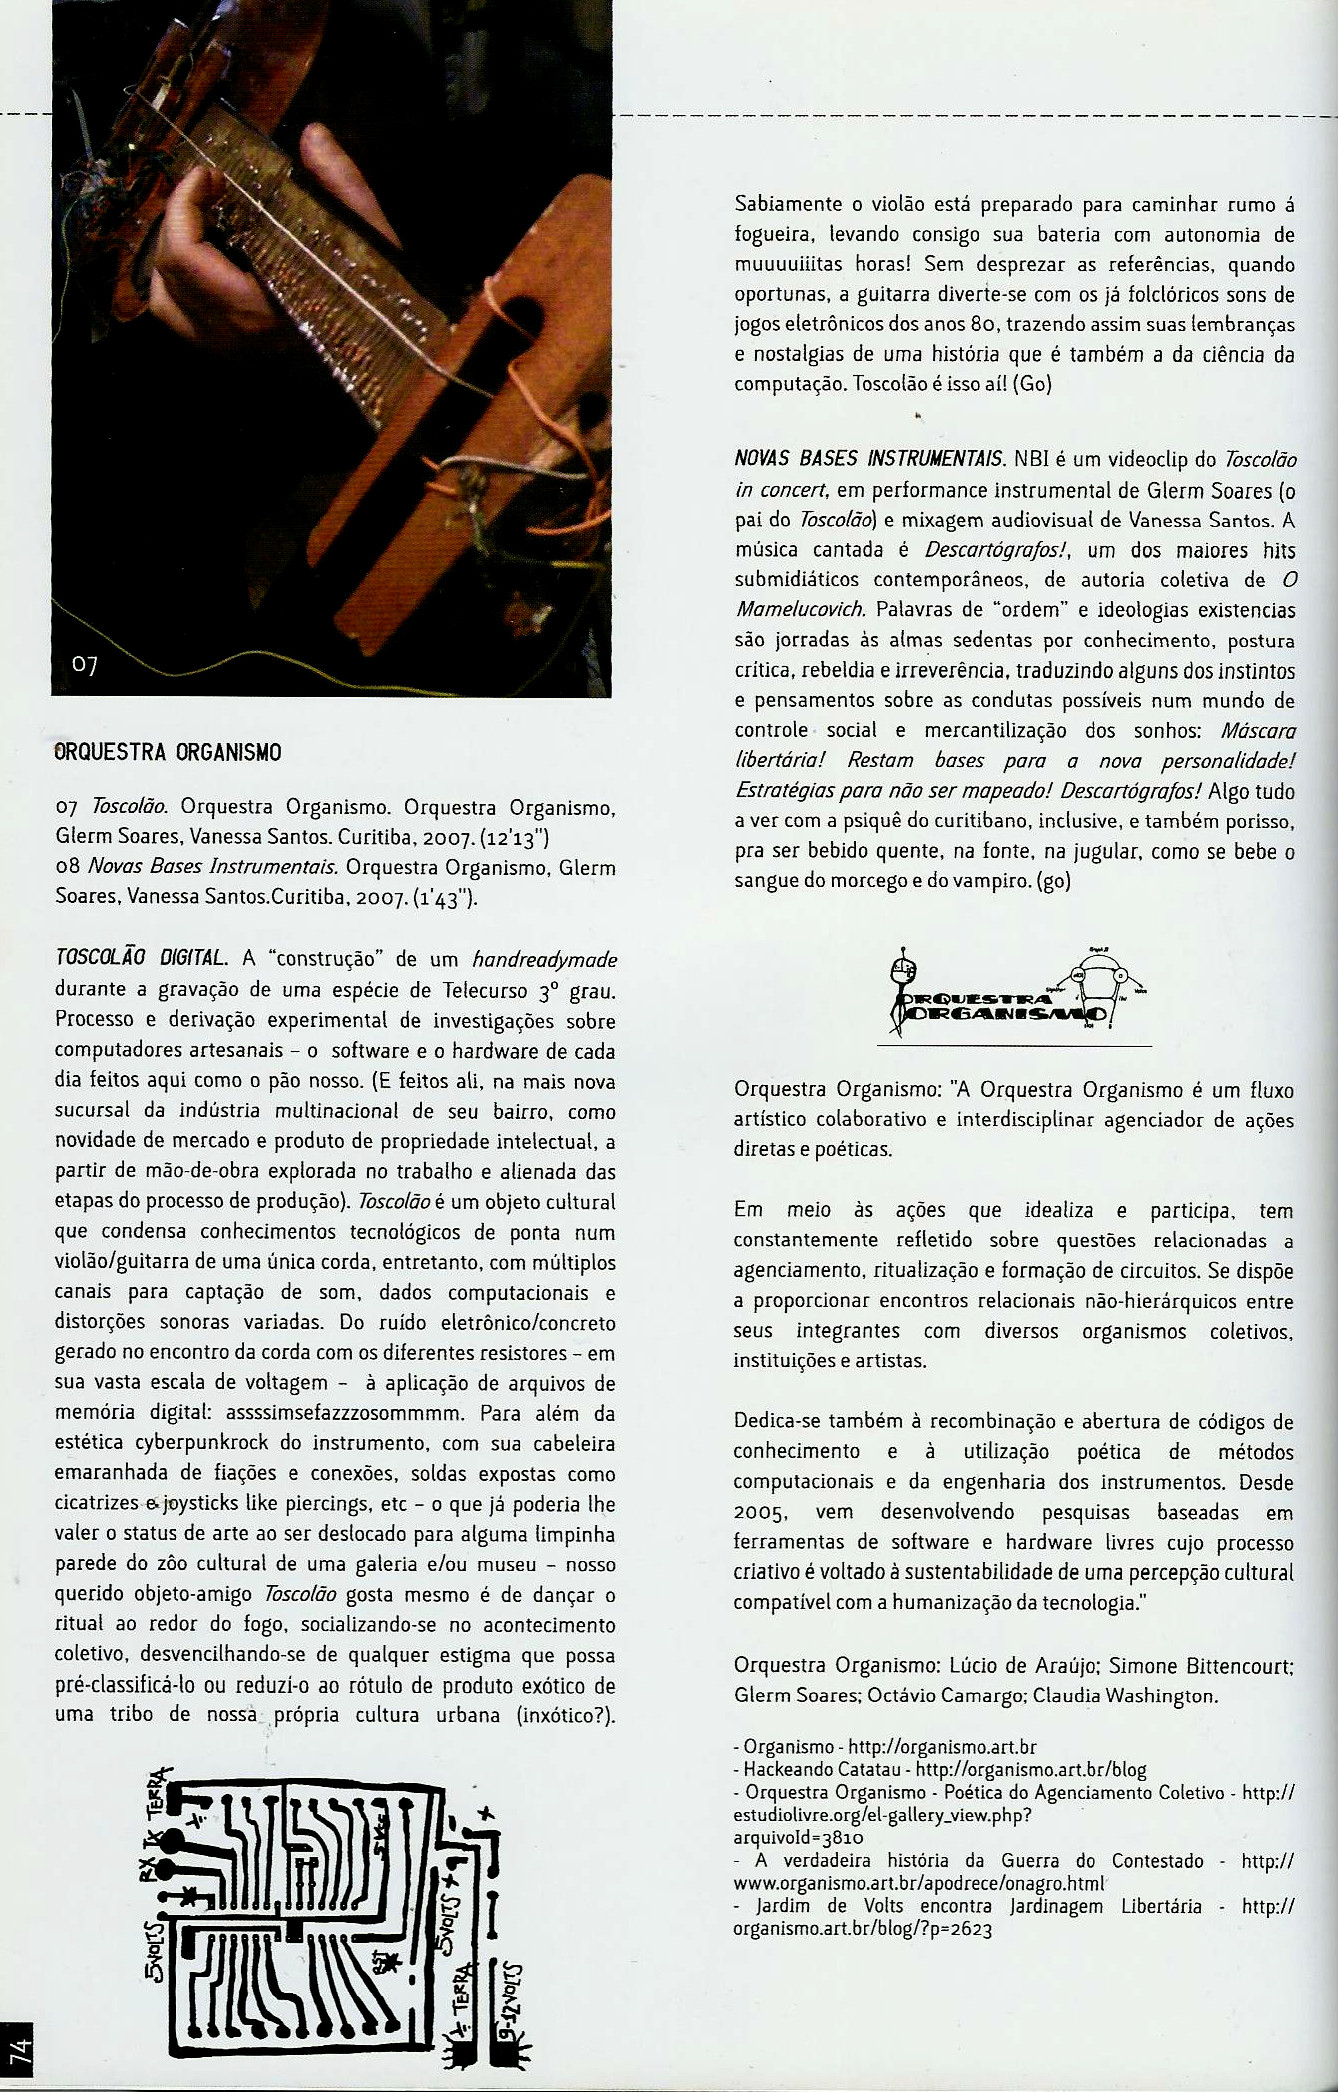 Orquestra Organismo - Catálogo Circuitos Compartilhados